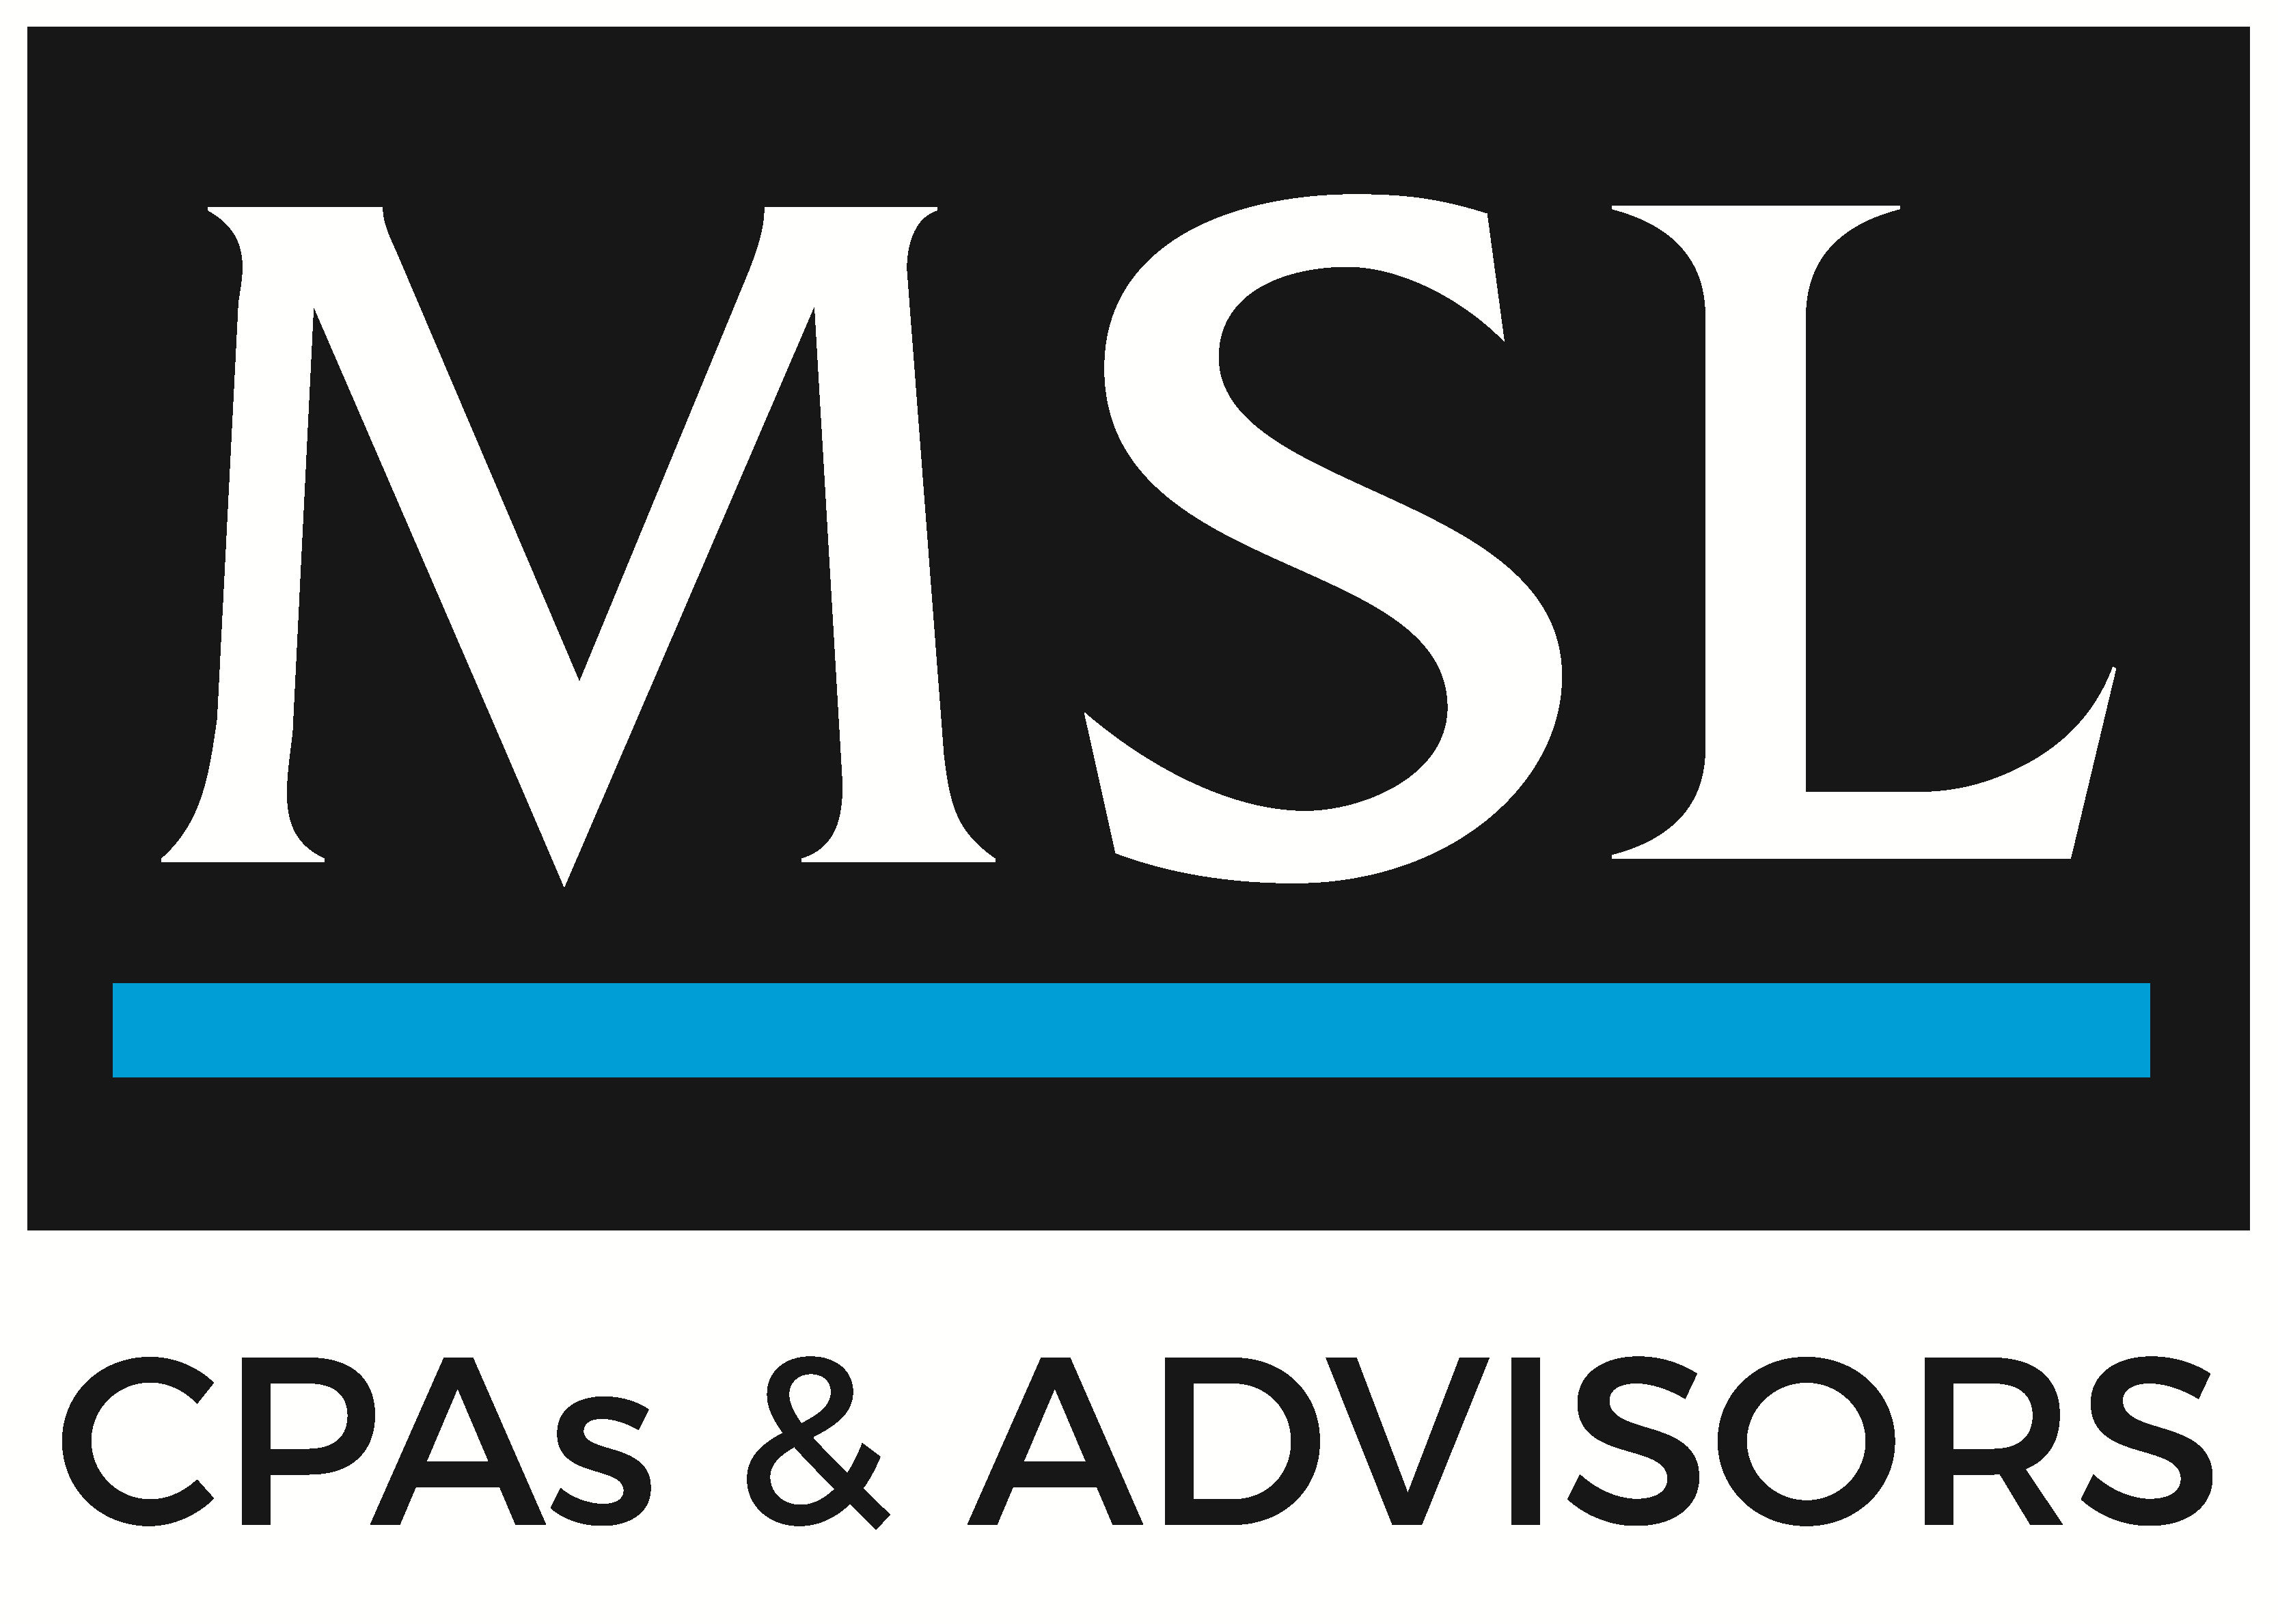 MSL, P.A. Company Logo